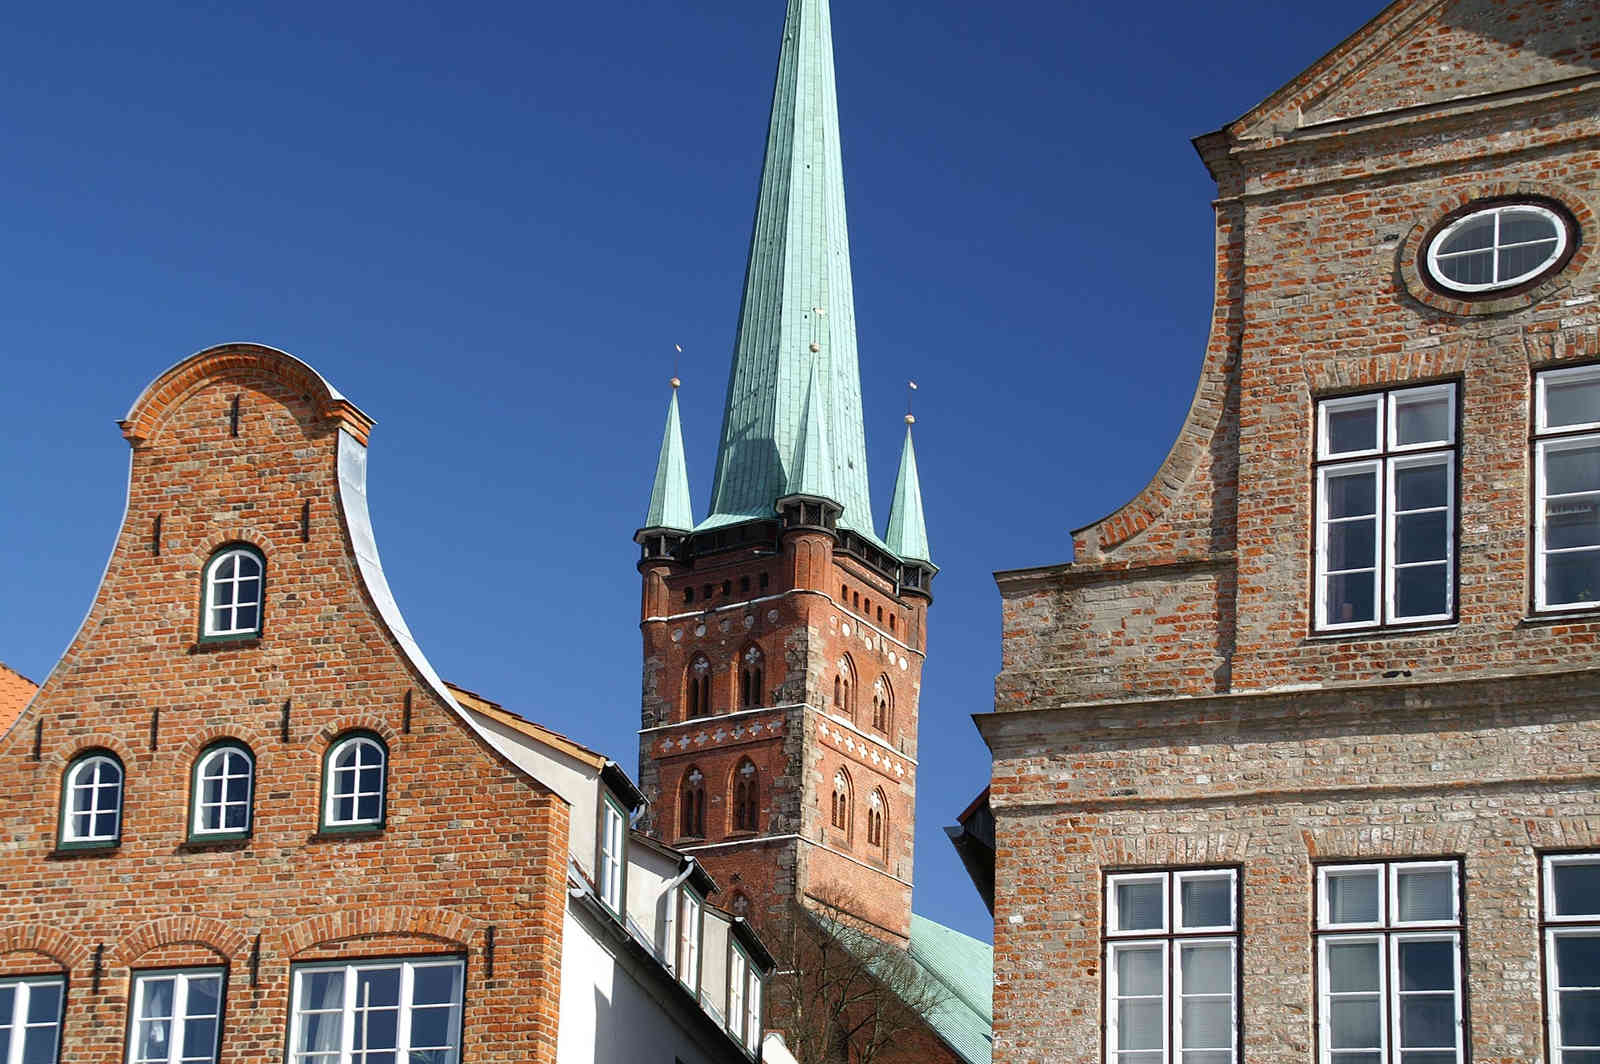 St.-Petri-Kirche, Lübeck